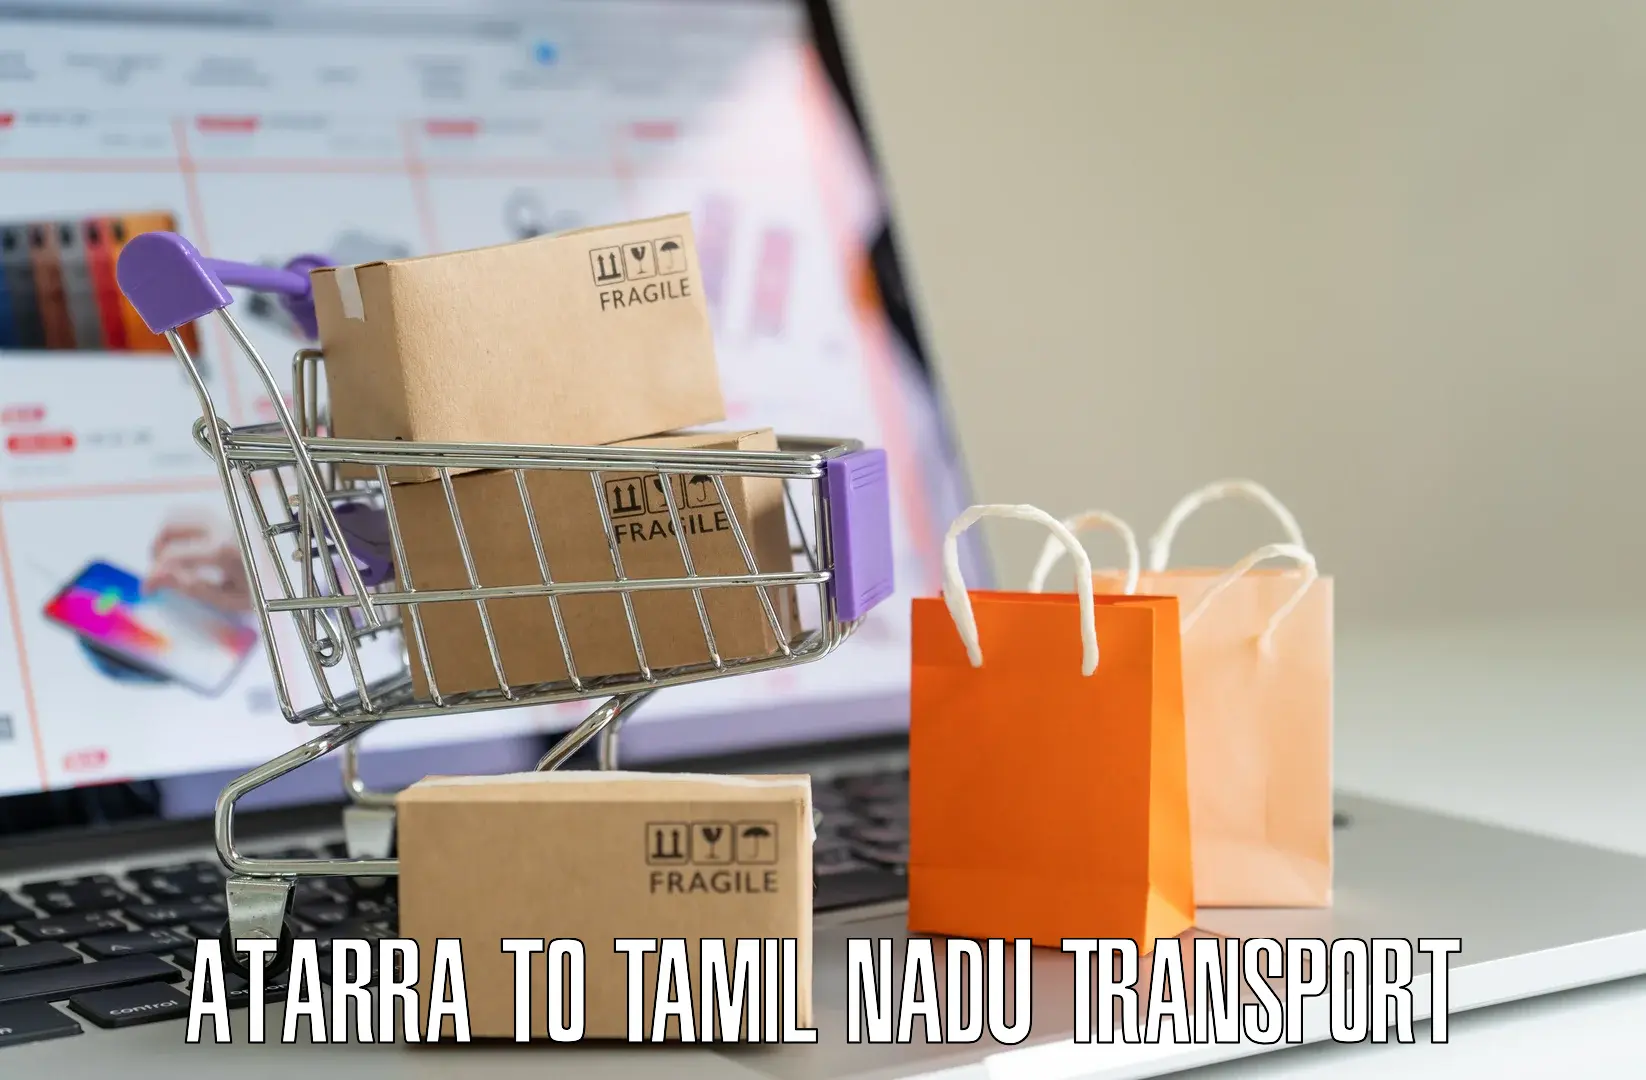 Daily transport service Atarra to Tirupattur